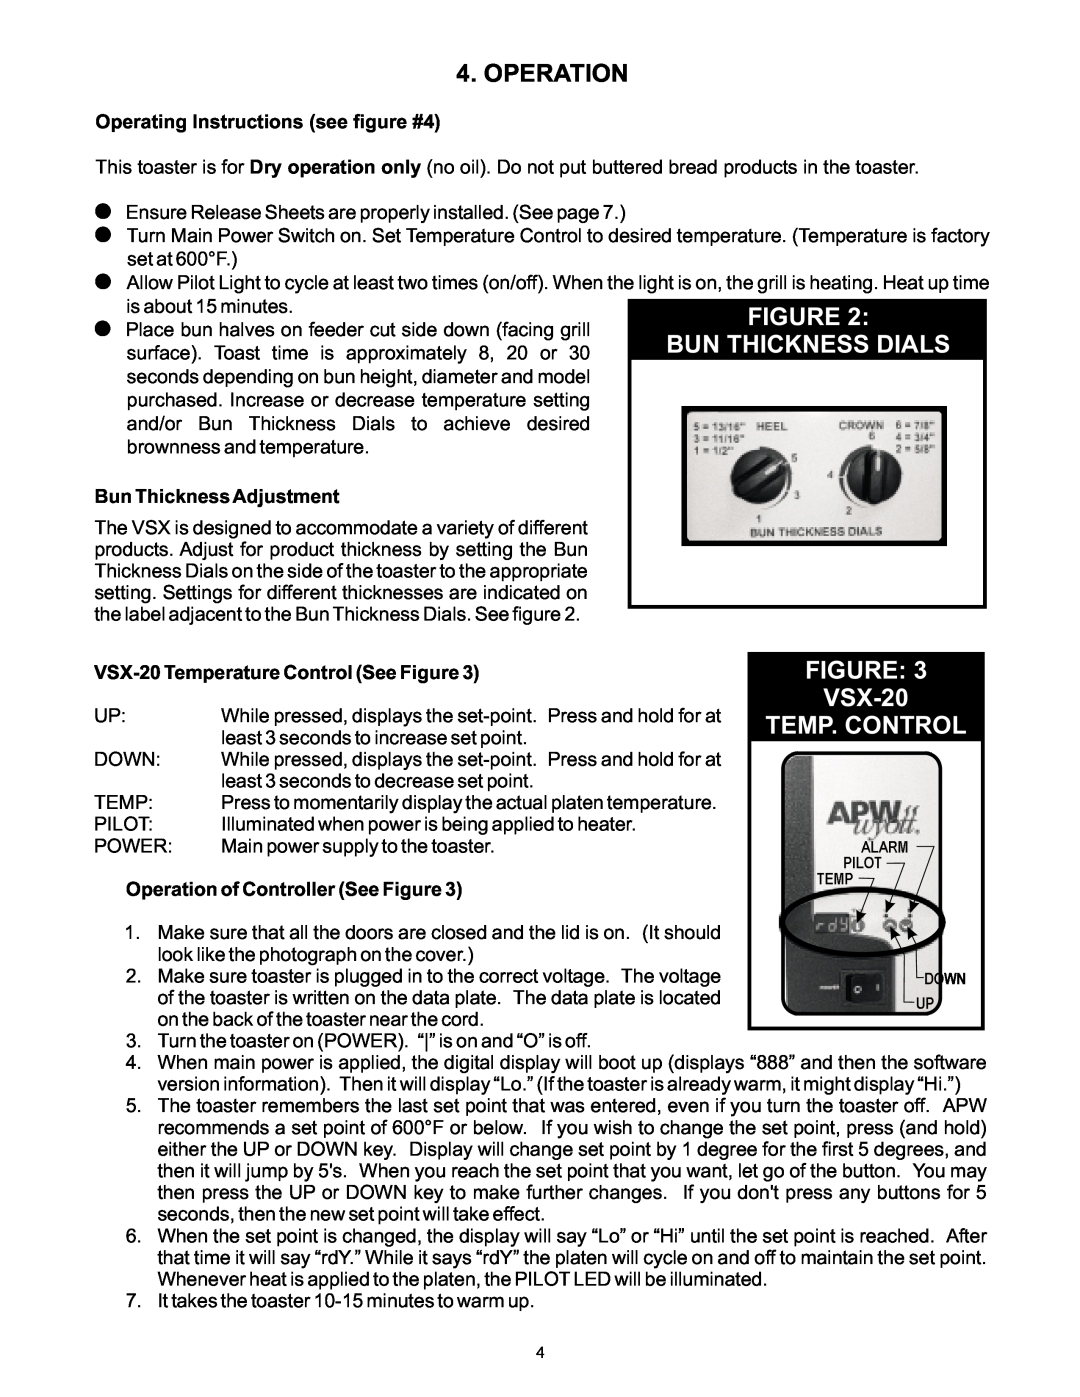 APW Wyott manual Operation, Bun Thickness Dials, VSX-20, Operating Instructions see figure #4, Bun Thickness Adjustment 